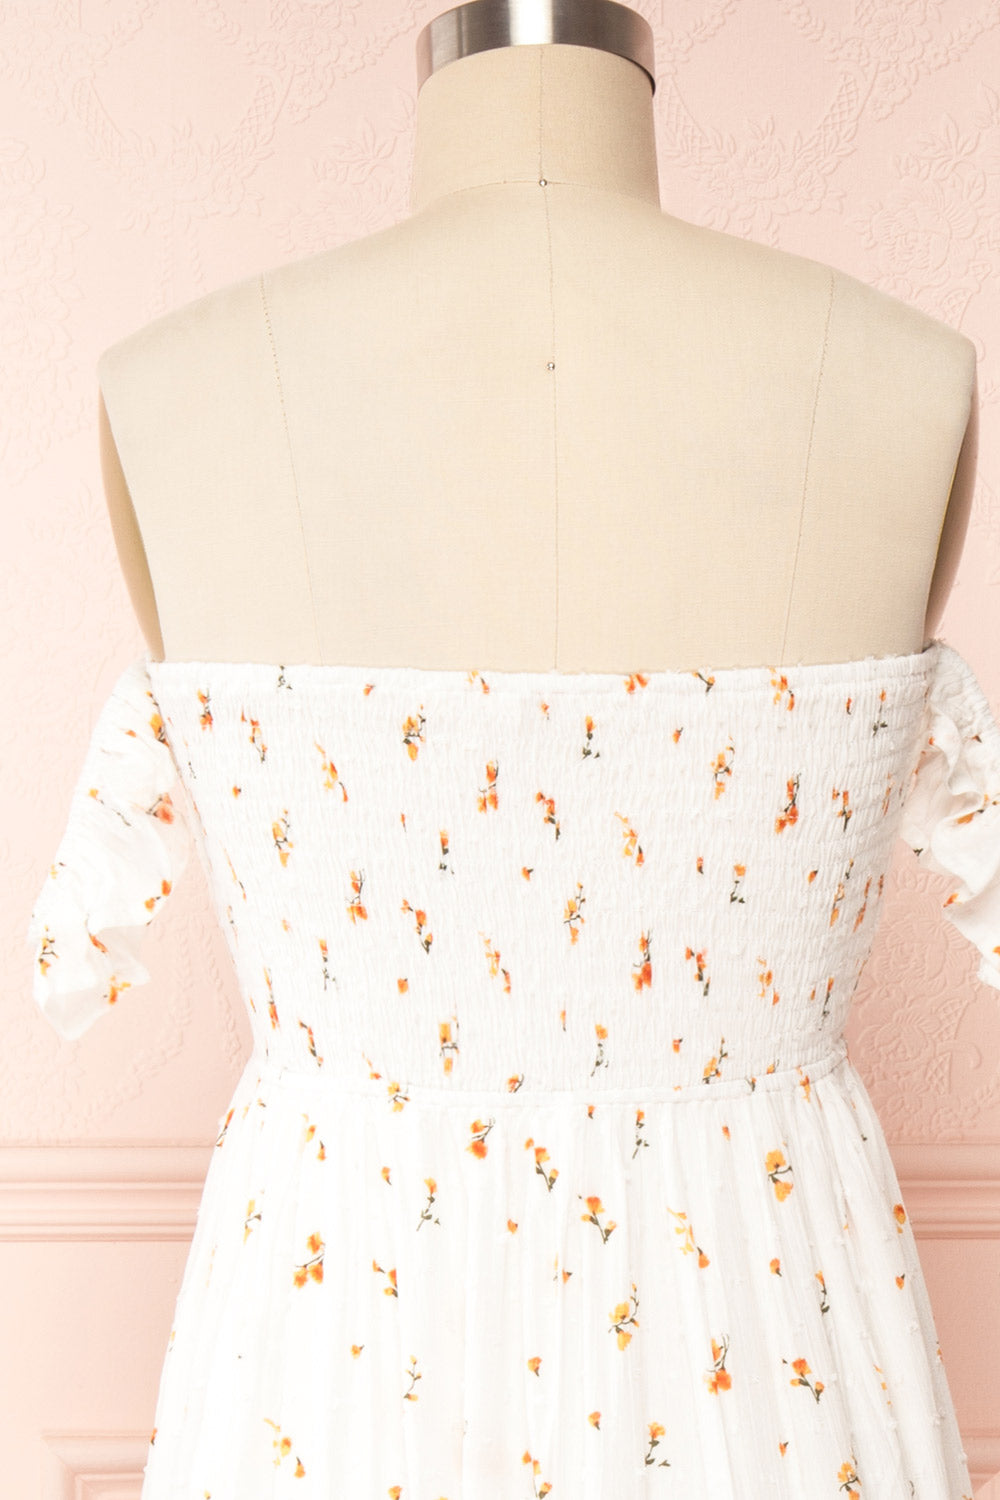 Elenie White Off Shoulder Maxi Dress | Boutique 1861 back close up